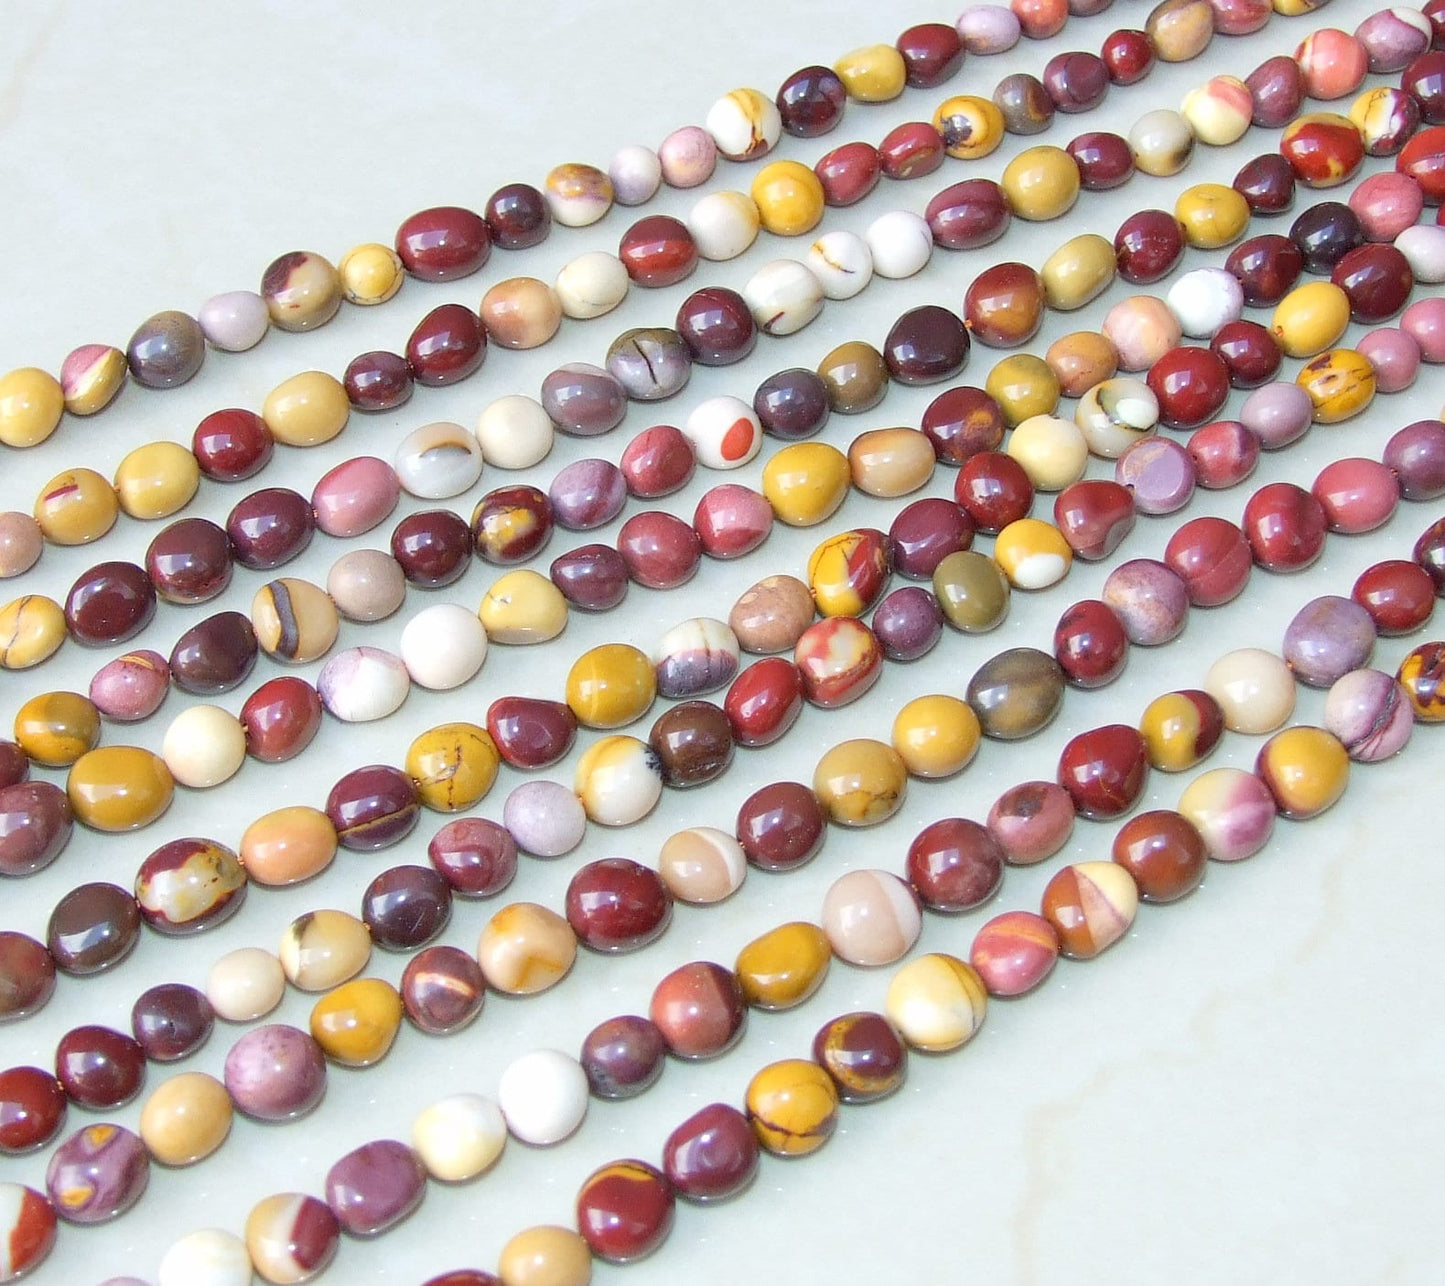 Mookaite Beads - Gemstone Beads - Mookaite Nuggets - Natural Mookaite Stone - Polished - Australian Jasper - Natural Gemstones  - 8mm - 10mm